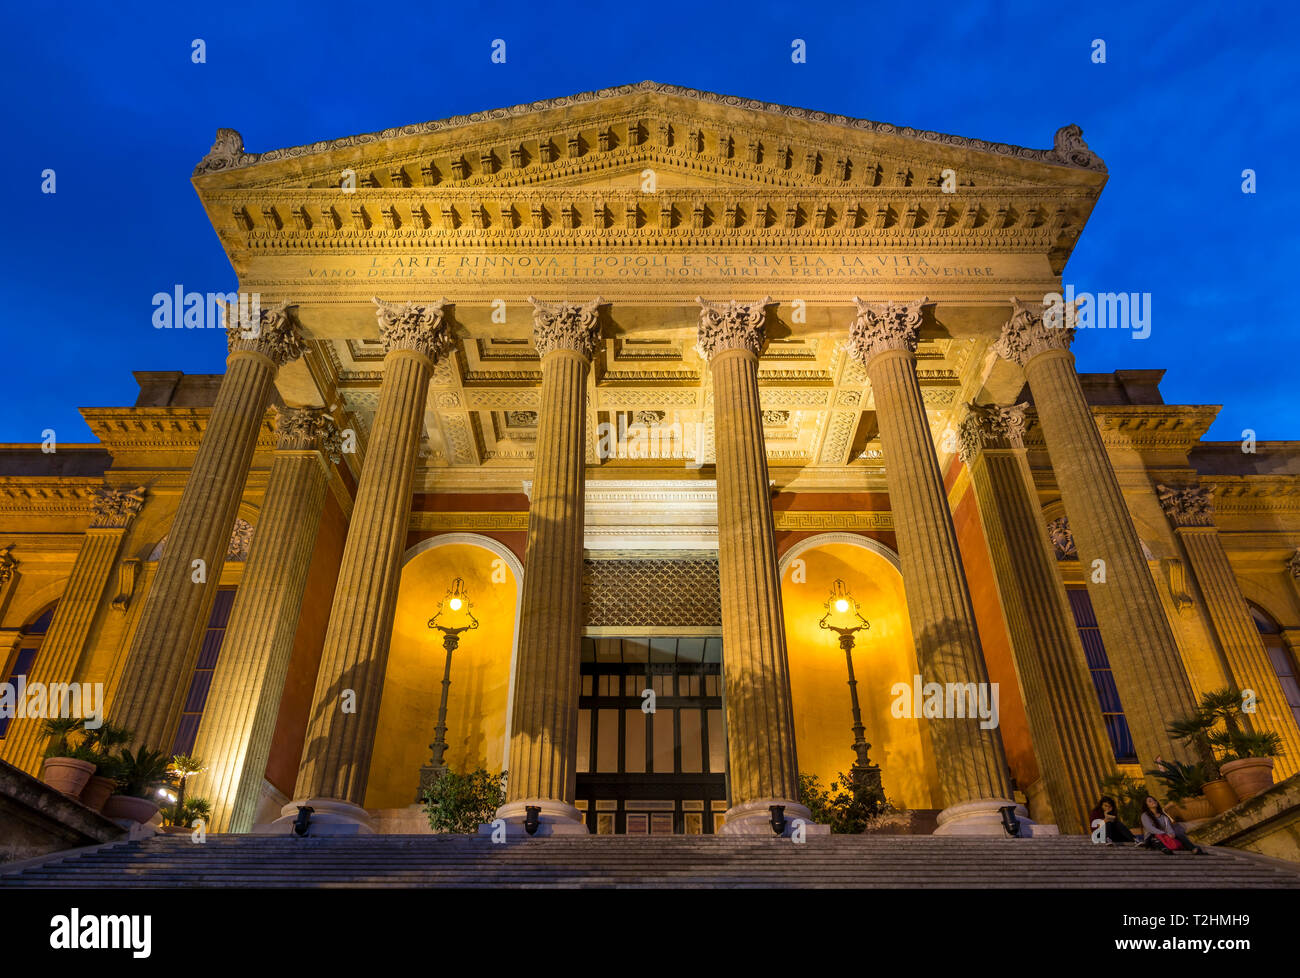 Le théâtre Massimo (Teatro Massimo) pendant l'heure bleue, Palermo, Sicily, Italy, Europe Banque D'Images